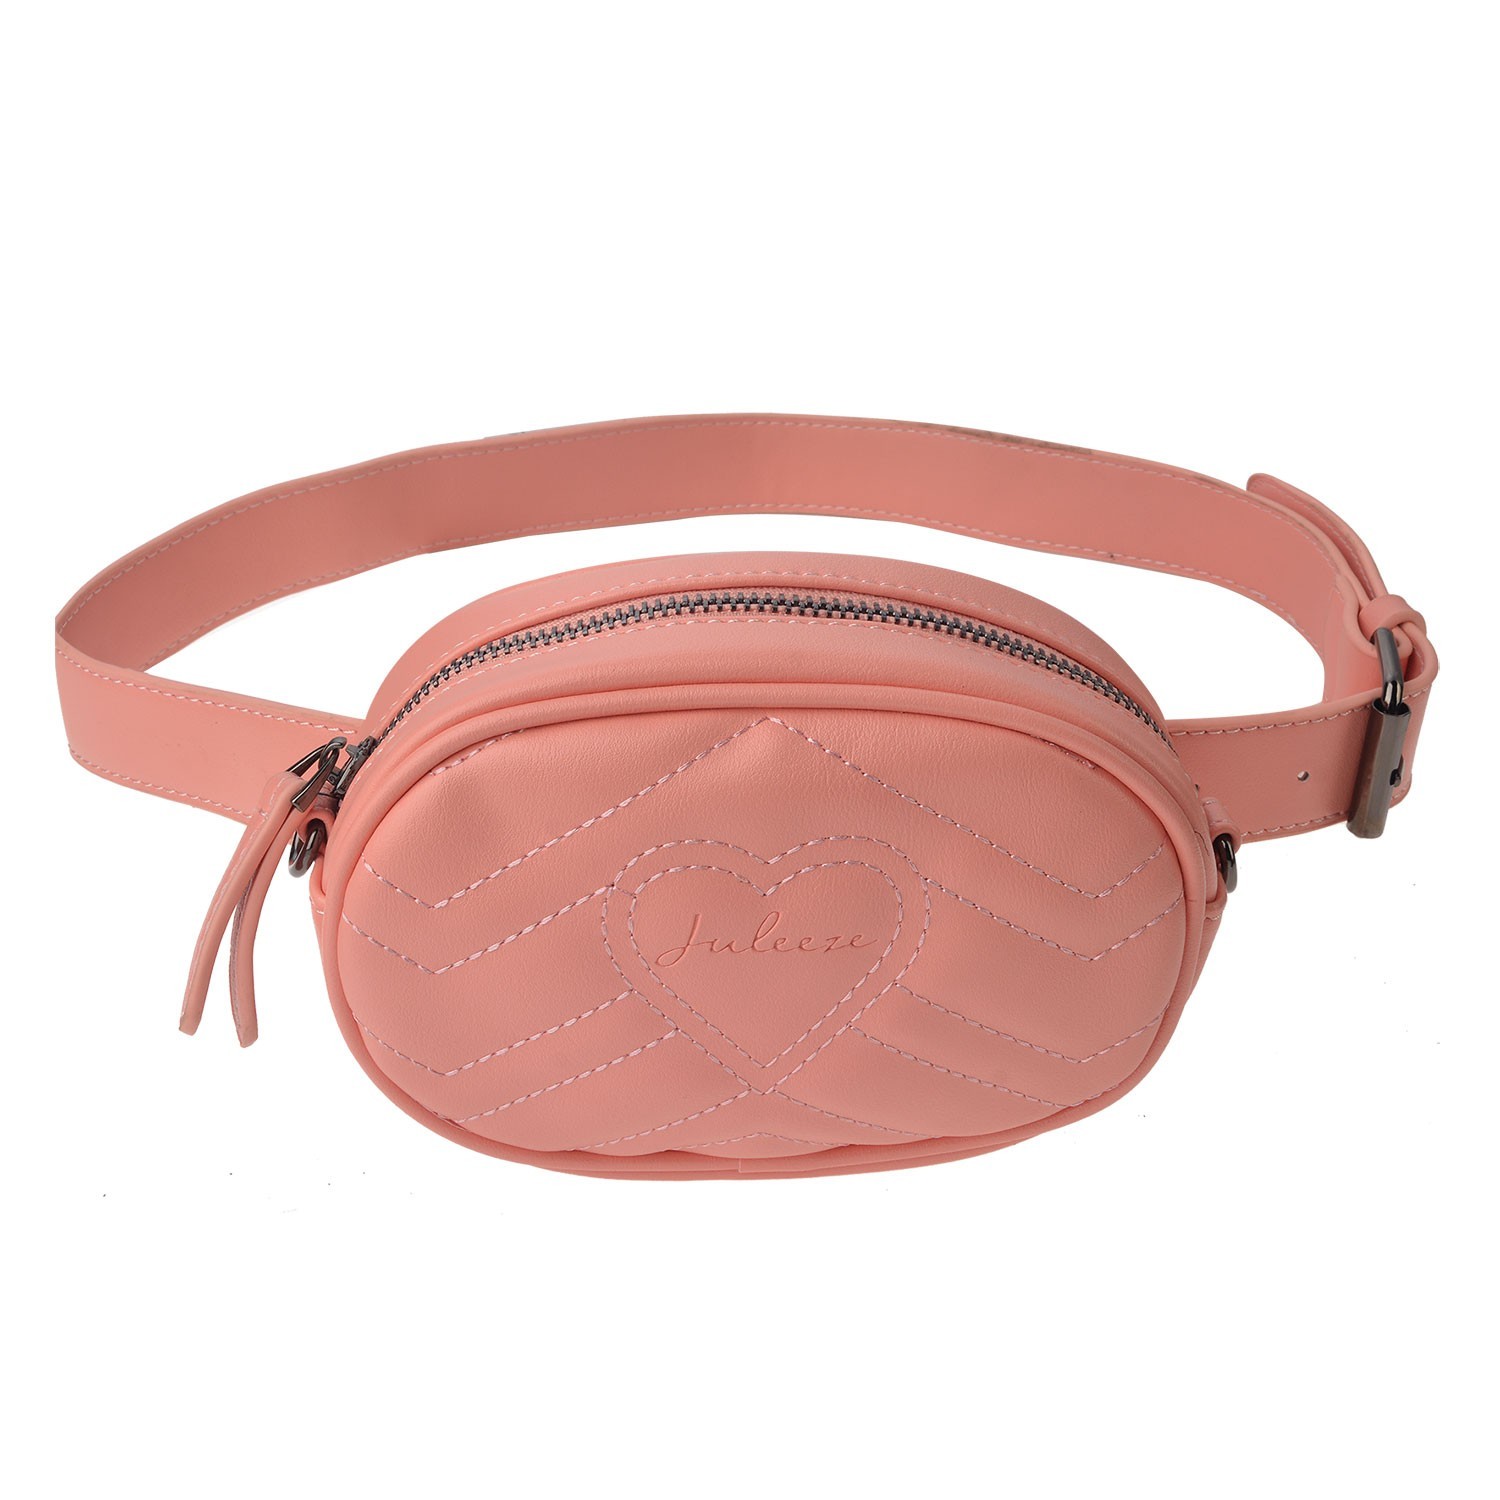 Růžová kabelka s páskem okolo pasu - 17*11*6 cm JZWB0003P